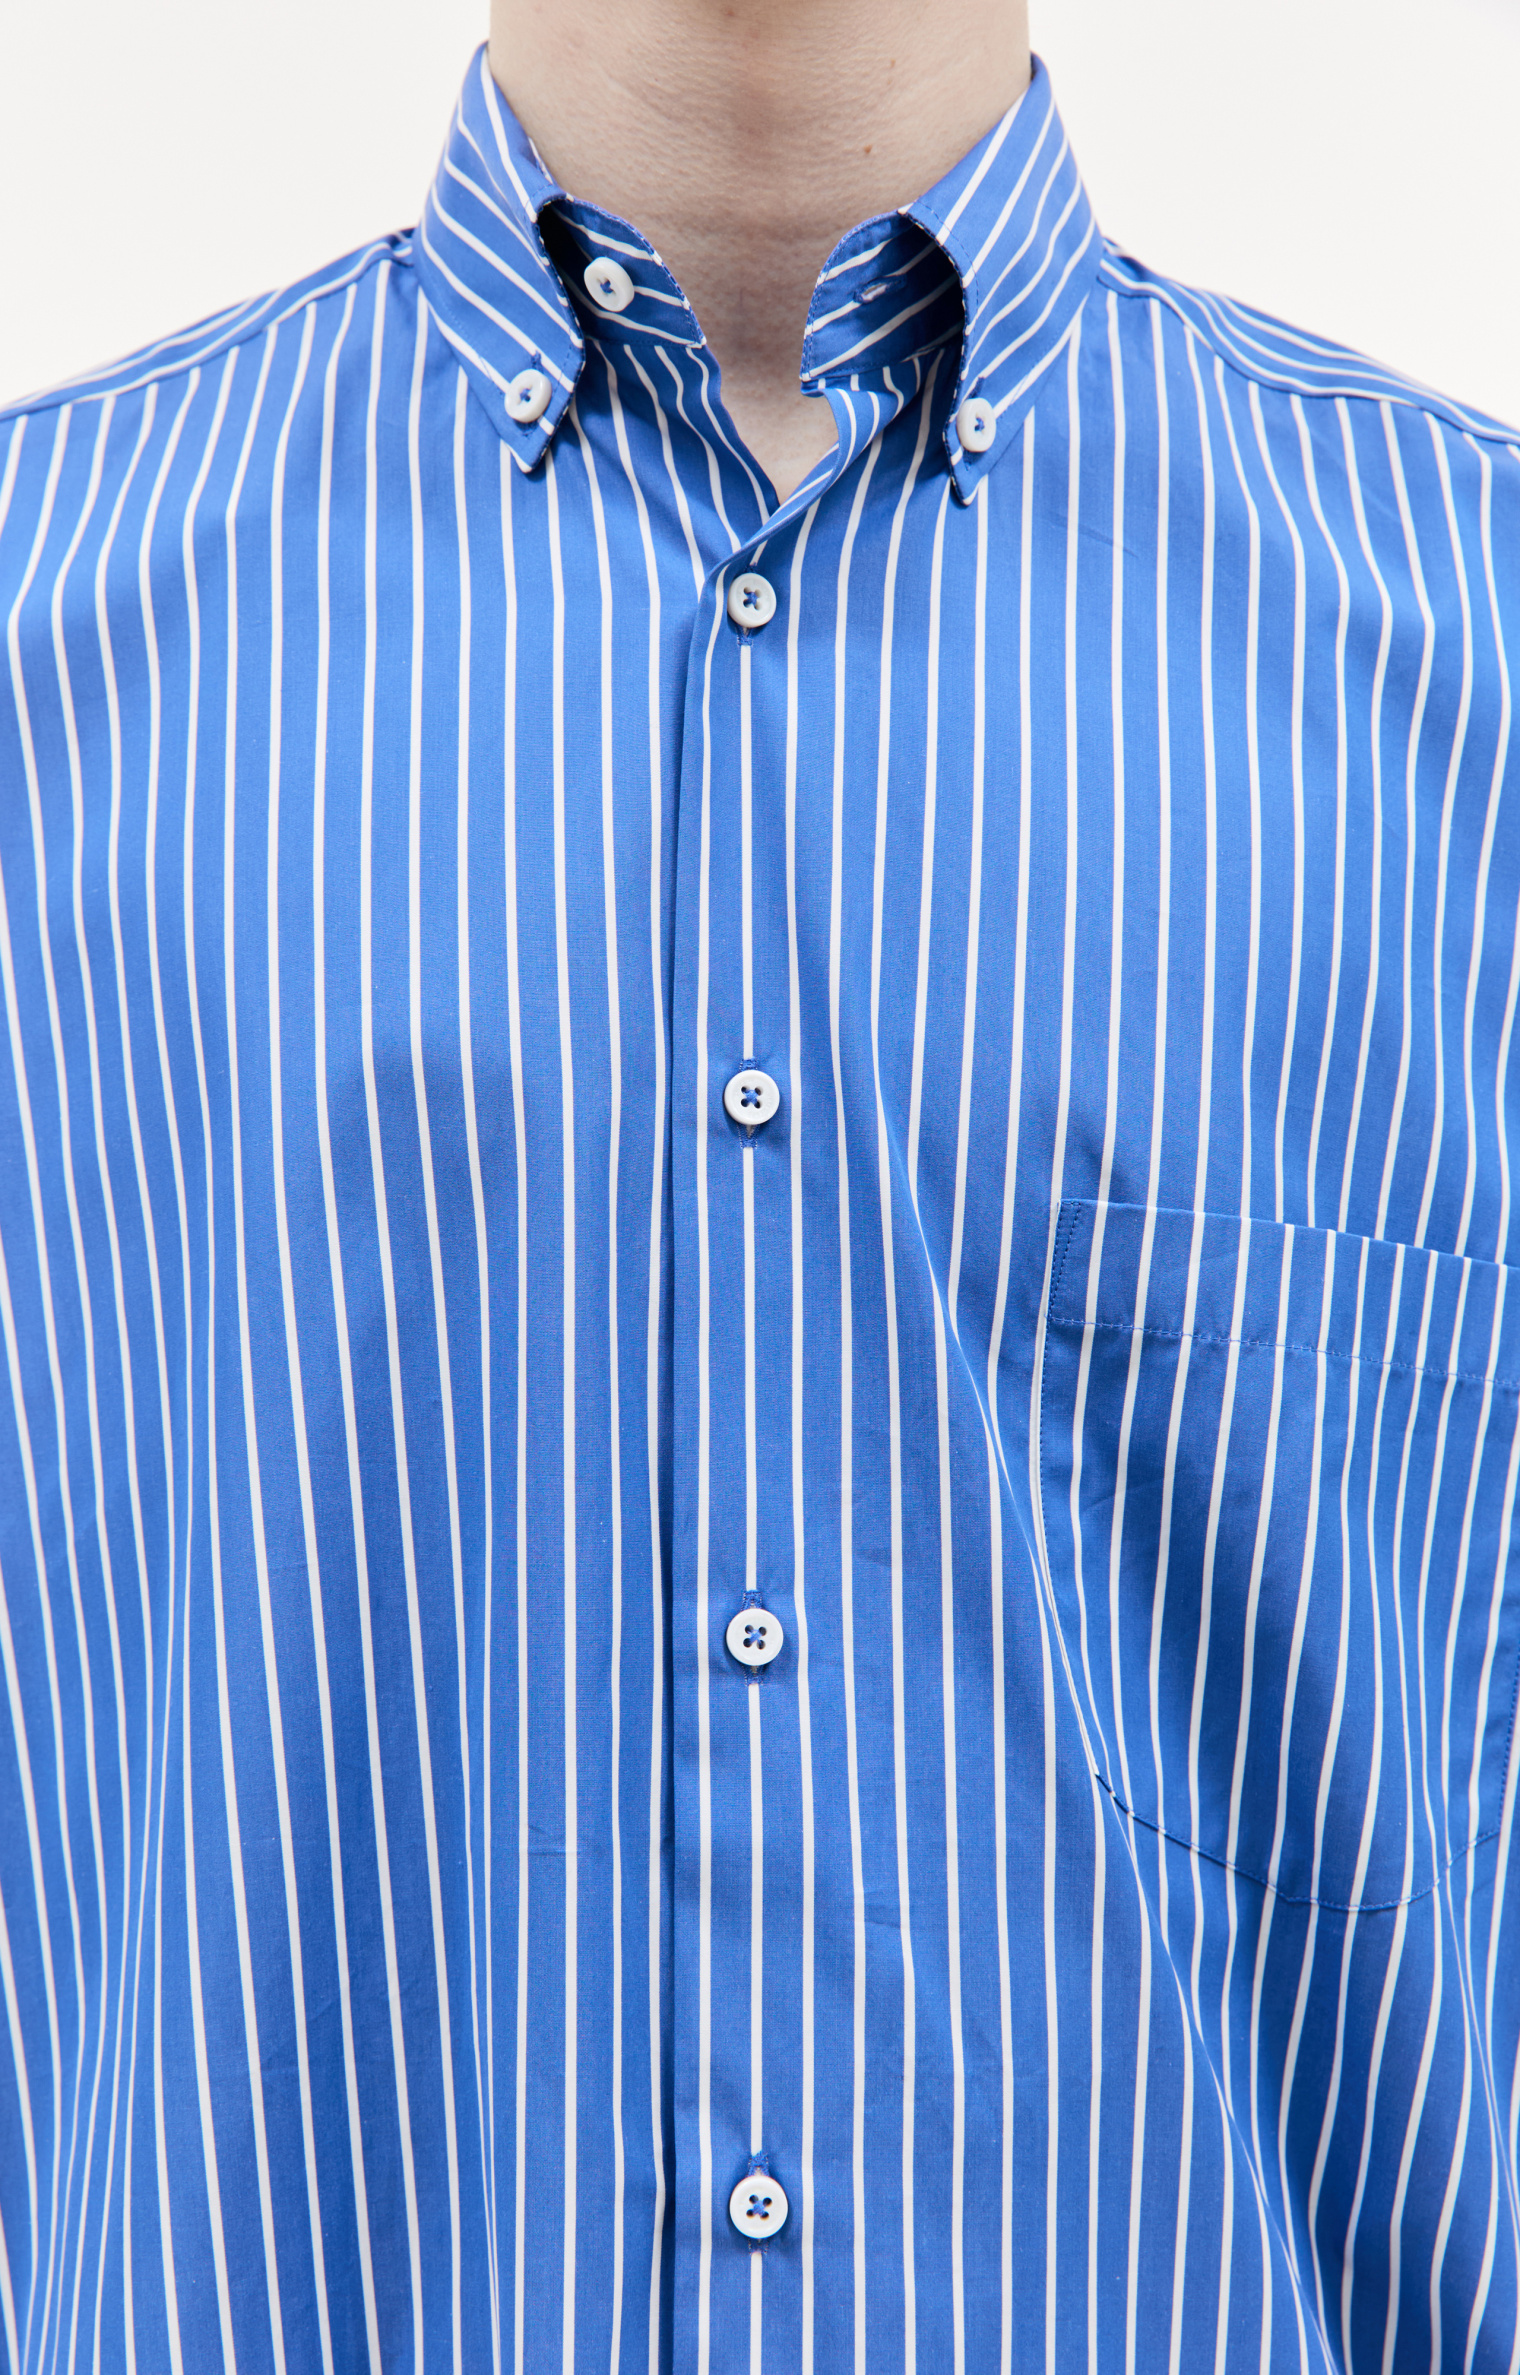 VETEMENTS Oversize striped shirt